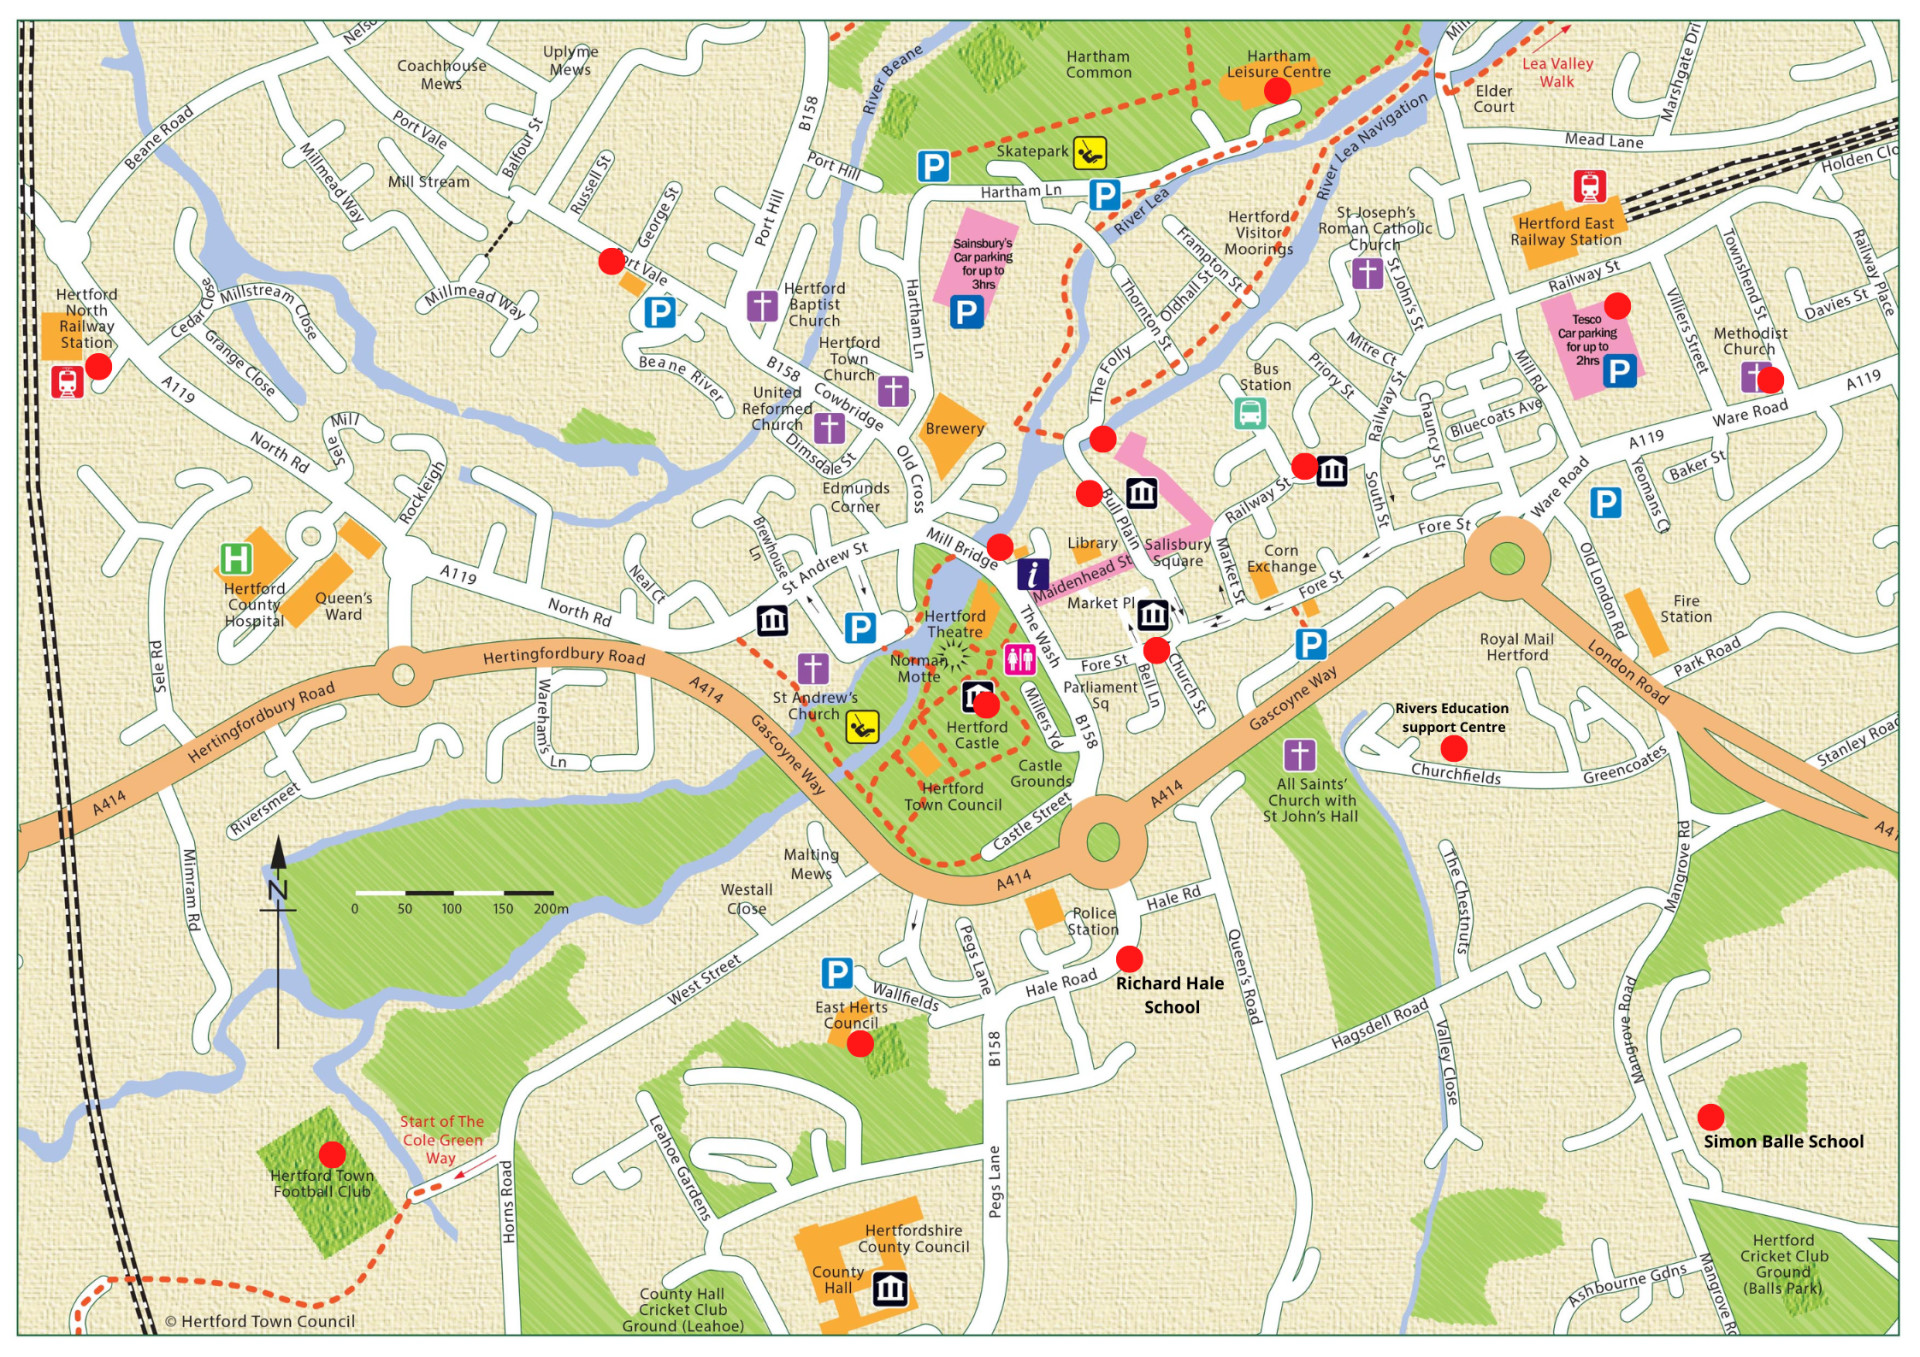 Map of Defibrillators in Hertford Town Centre